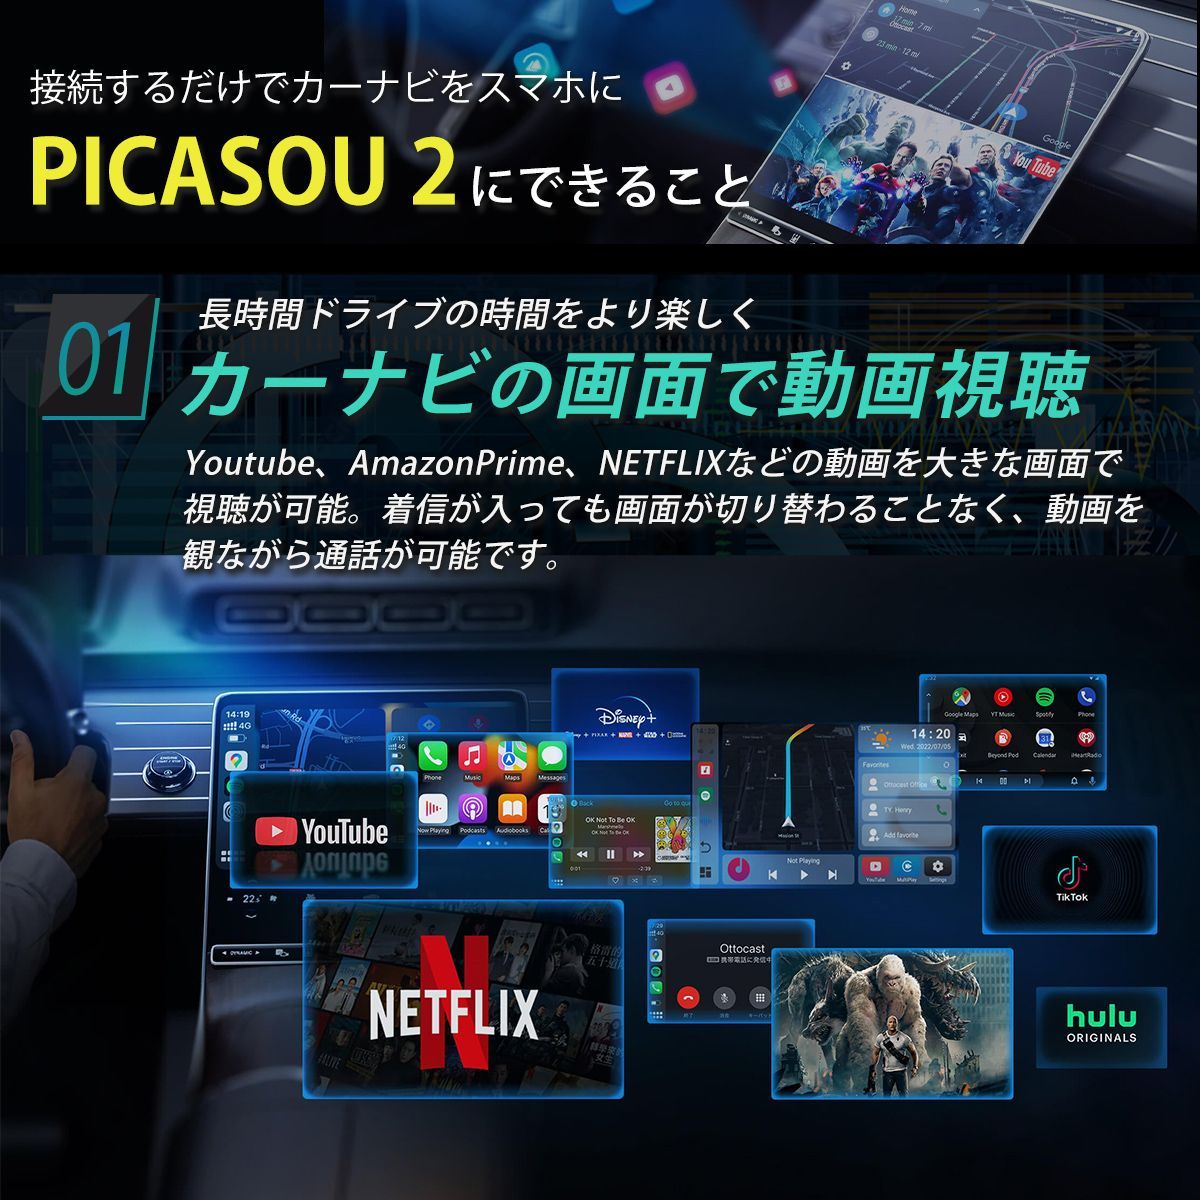 ottocast オットキャスト PCS40 PICASOU2 CarPlay AI Box 4G-LTE HDMI